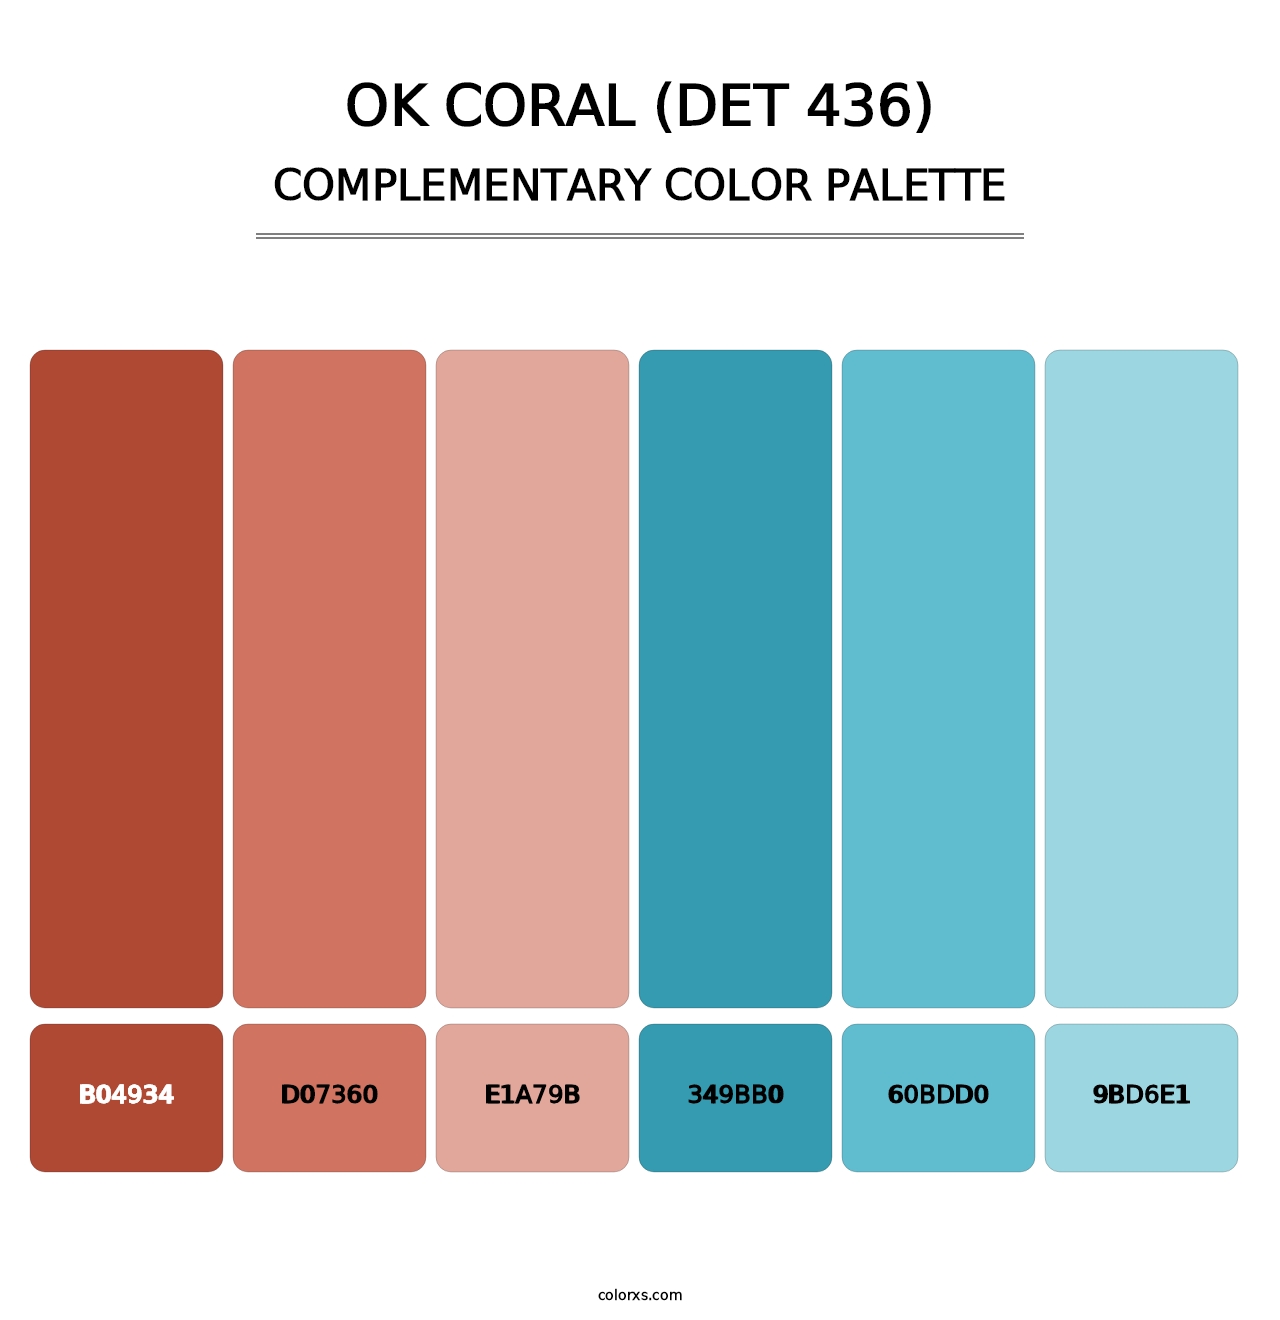 OK Coral (DET 436) - Complementary Color Palette